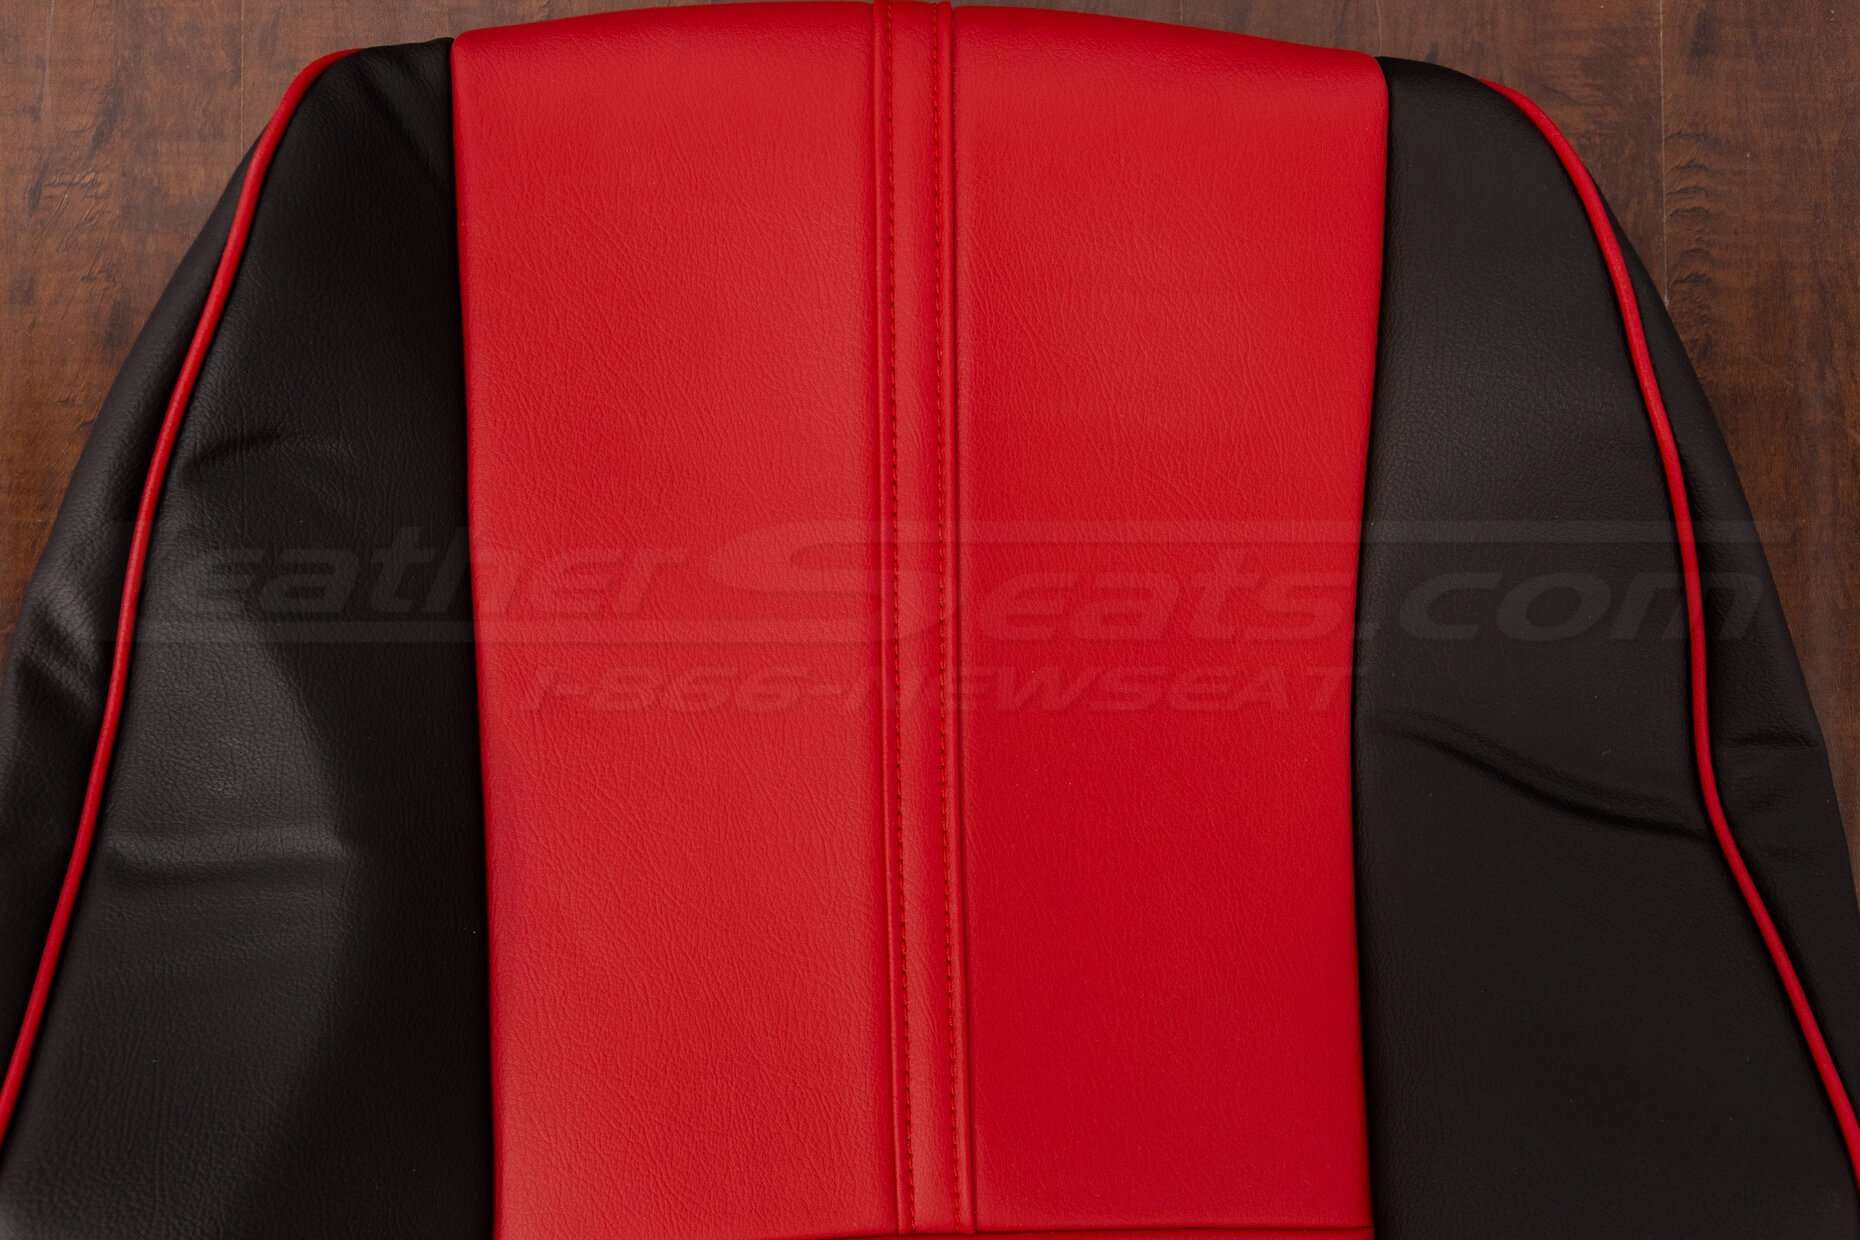 88-92 Chevrolet Camaro Upholstery Kit - Black & Bright Red - Insert and bolster medium view